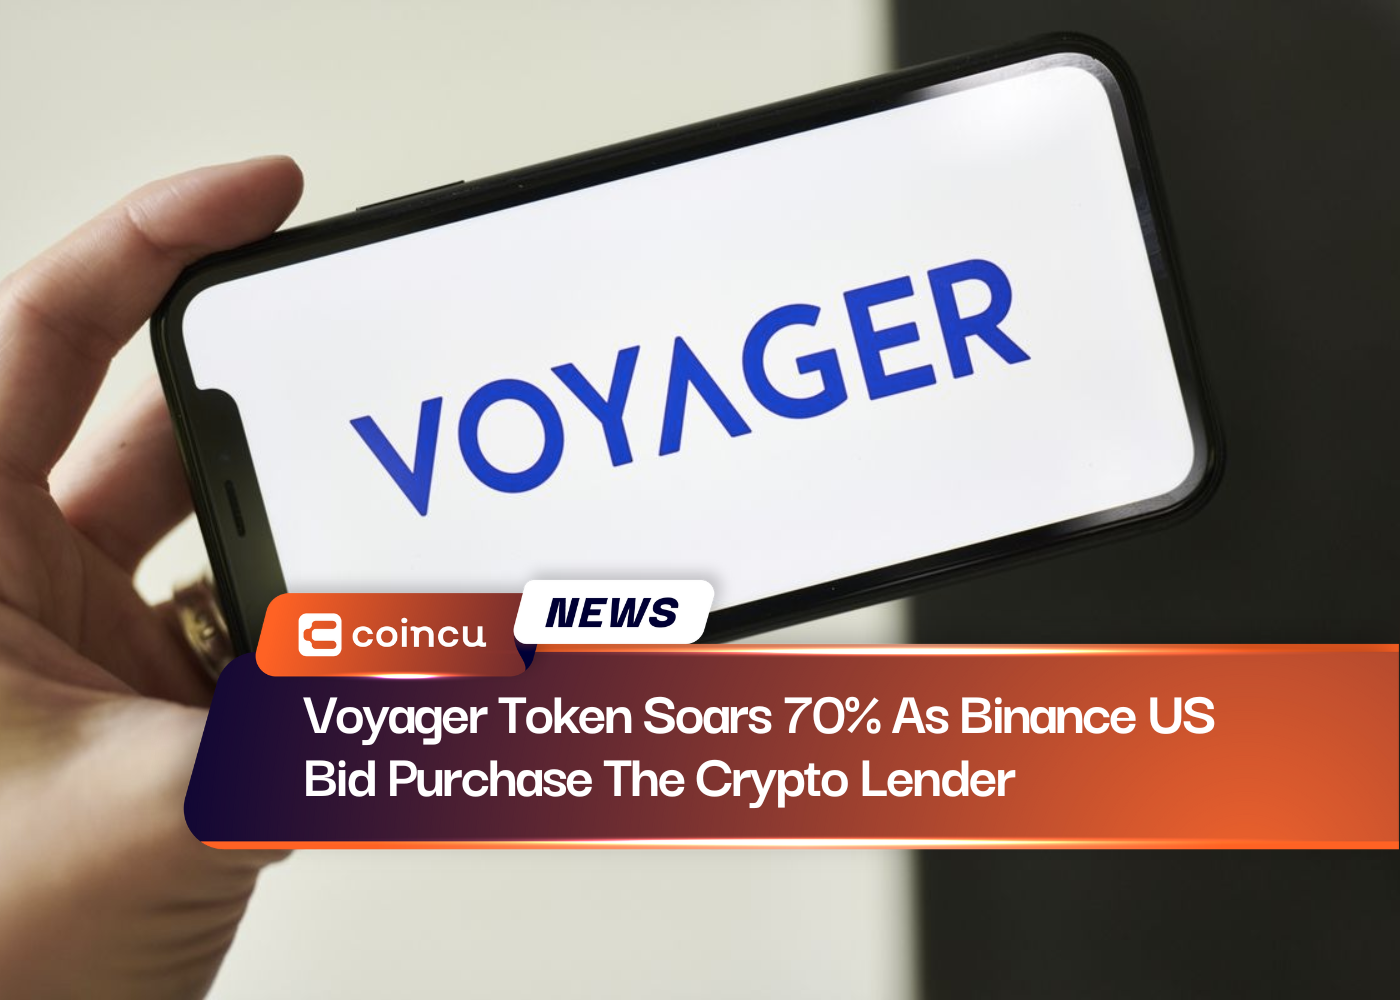 Voyager Token Soars 70% As Binance US Bid Purchase The Crypto Lender